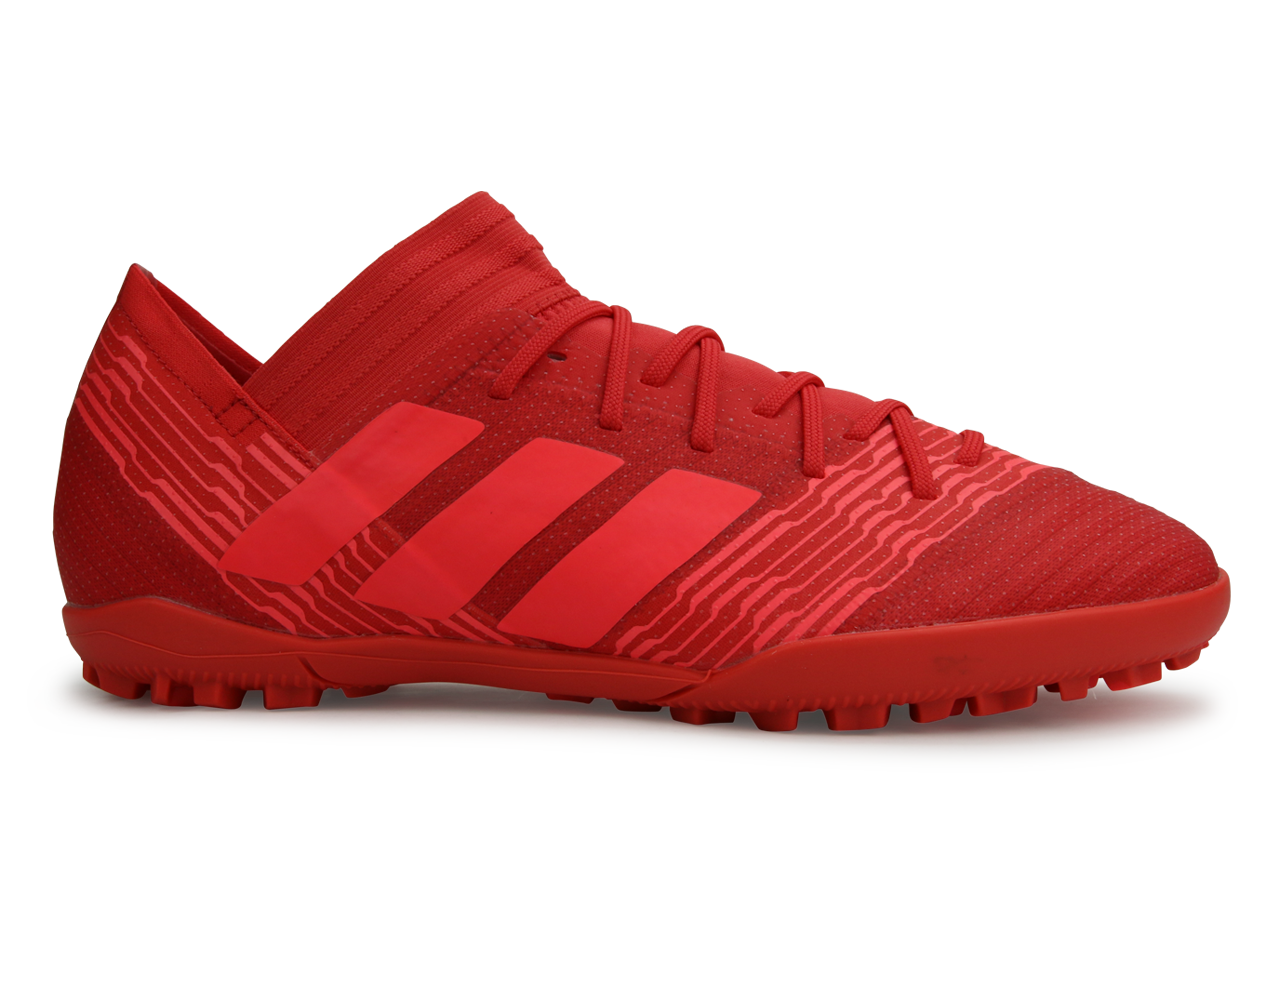 adidas Men's Nemeziz Tango 17.3 Turf Soccer Shoes Real Coral/Redzes